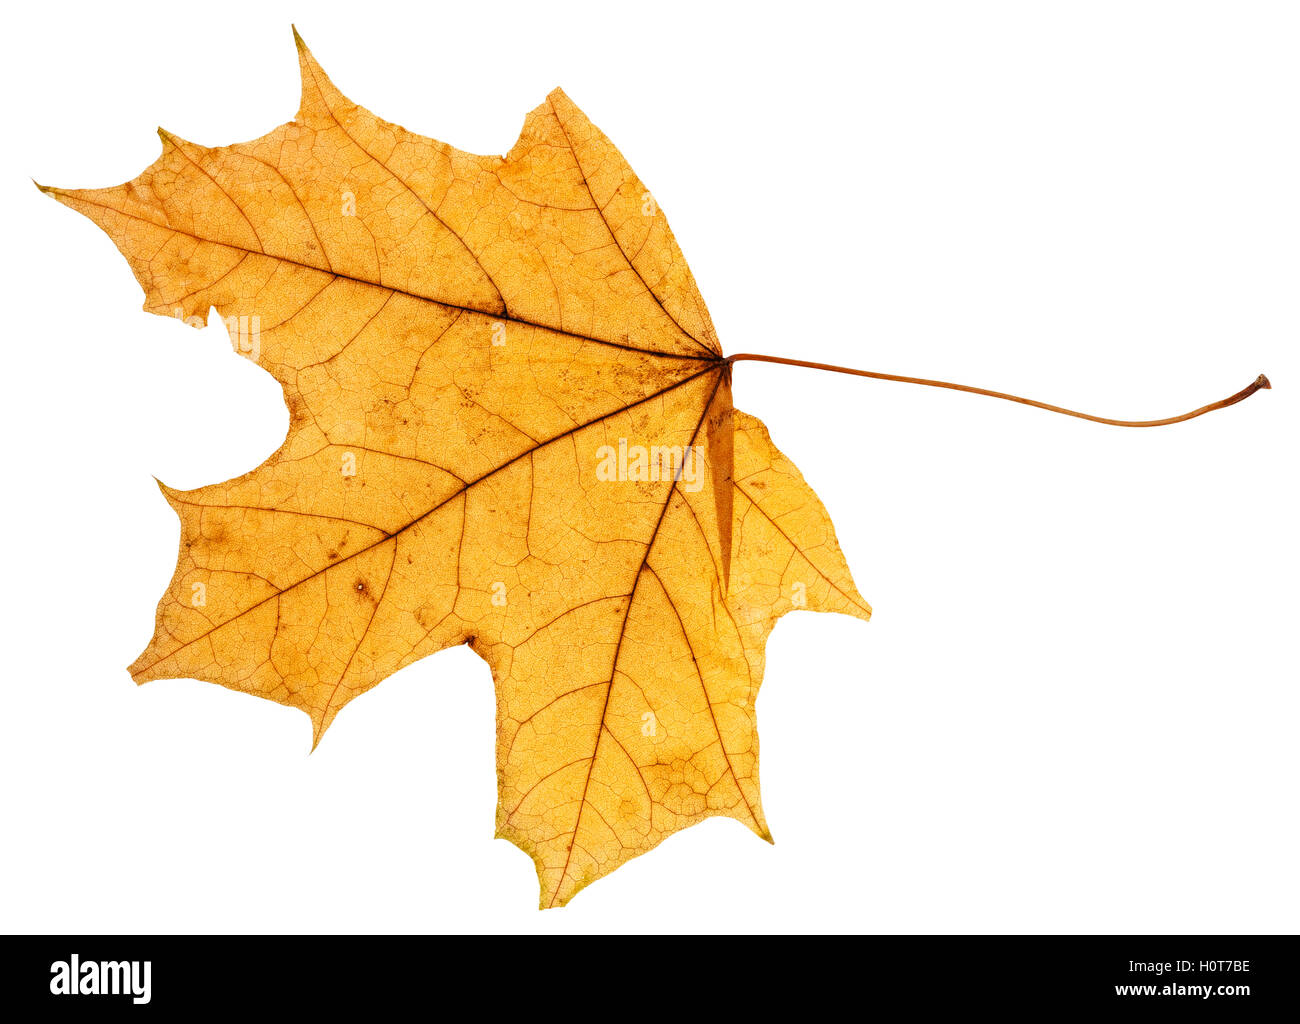 yellow autumn leaf of maple tree (Acer platanoides, Norway maple) isolated on white background Stock Photo